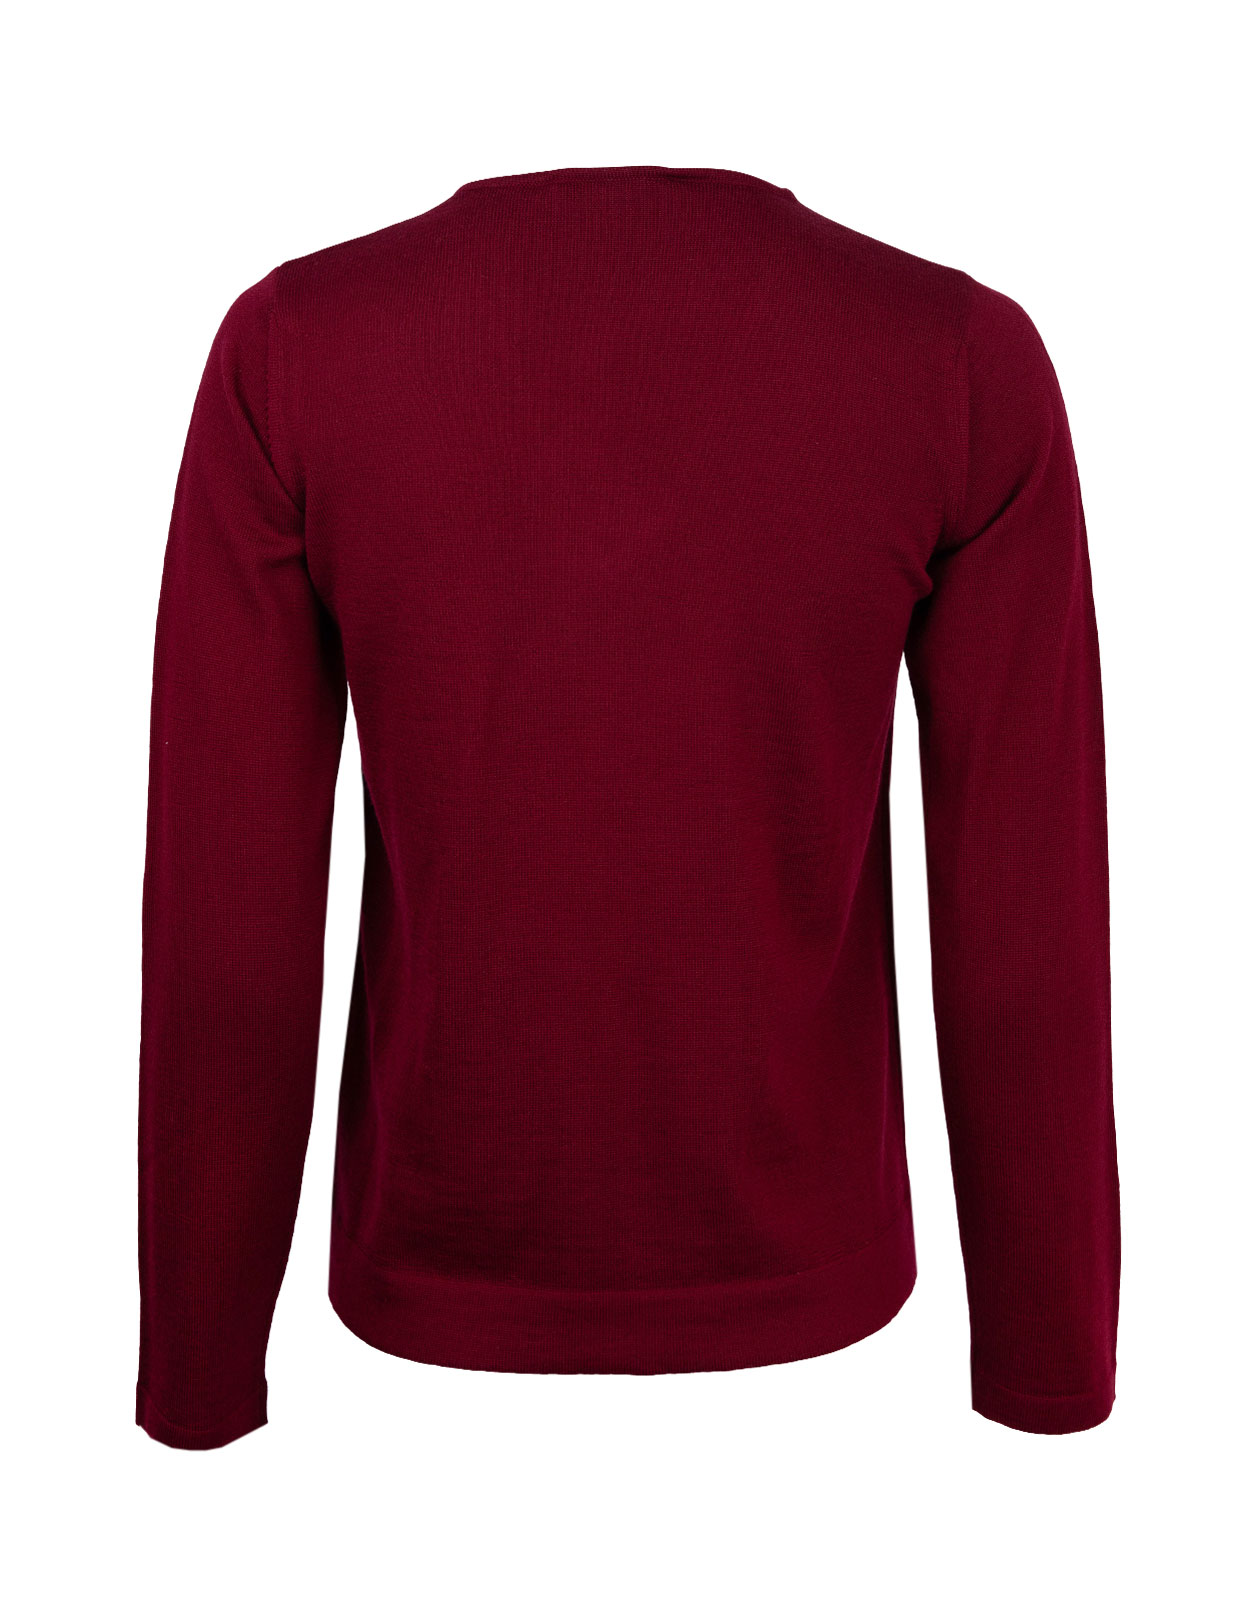 V-neck Sweater Bario/Burgundy